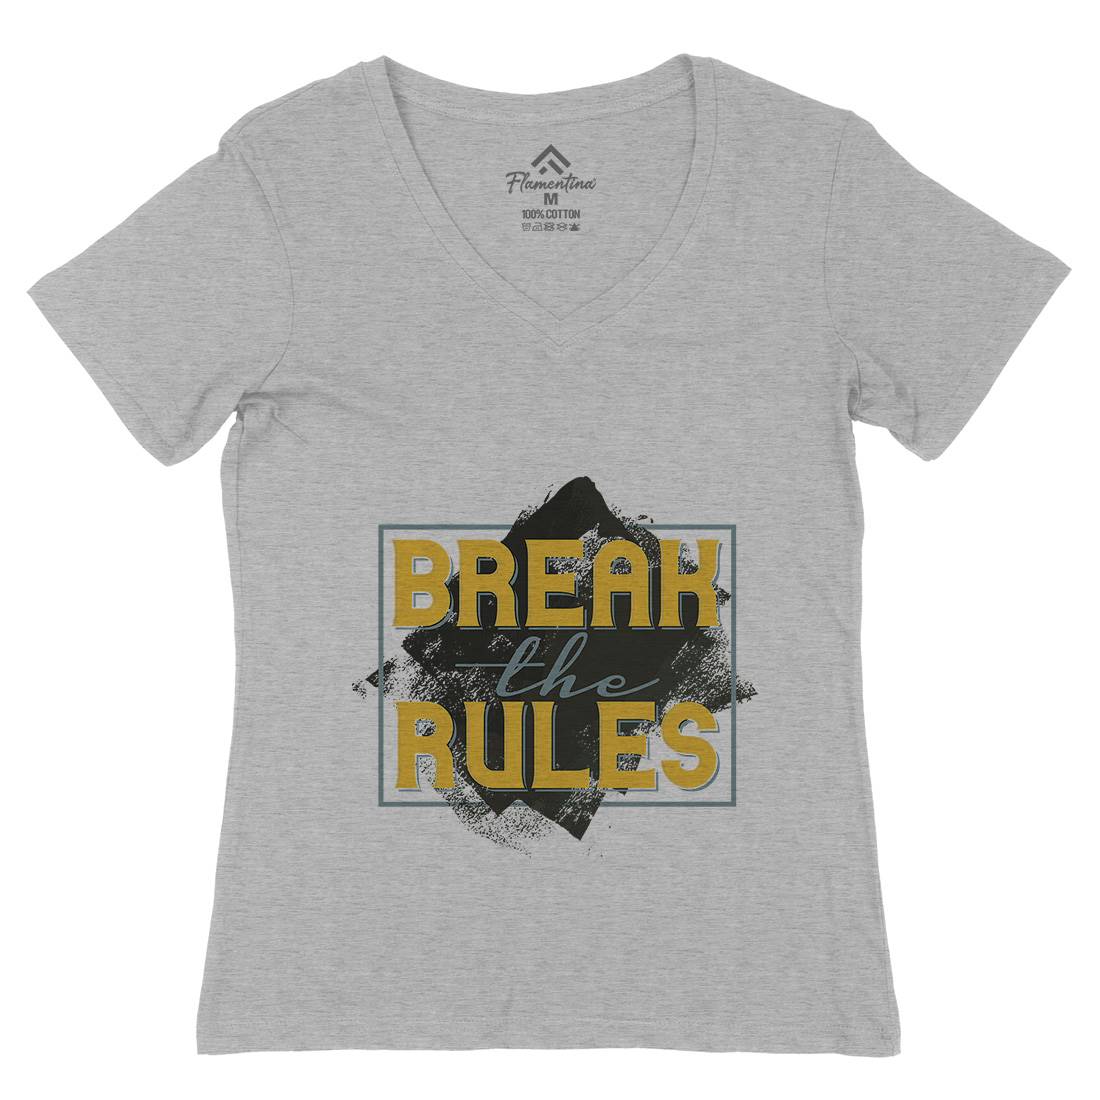 Break The Rules Womens Organic V-Neck T-Shirt Retro B291